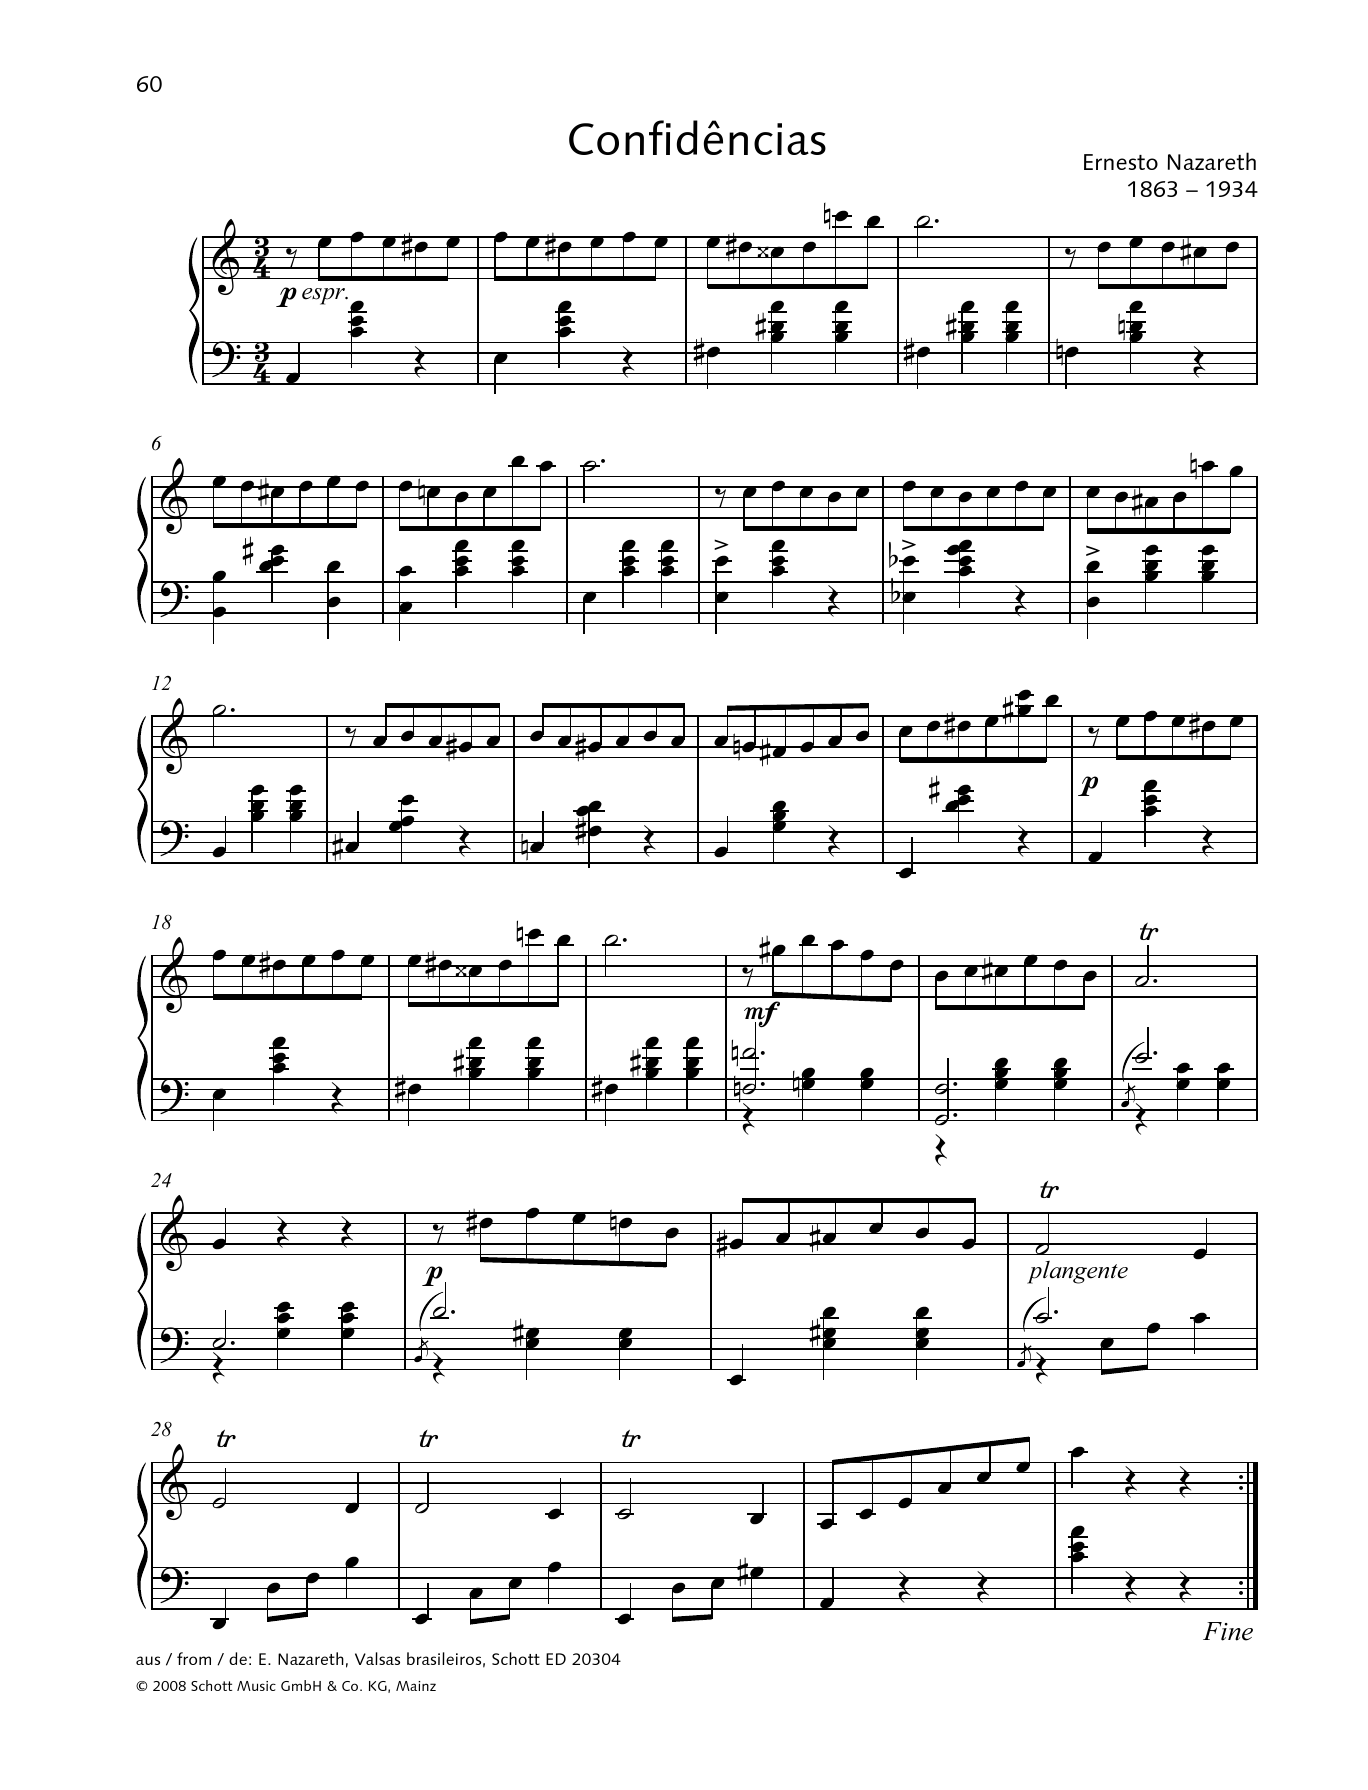 Ernesto Nazareth Confidencias Sheet Music Notes & Chords for Piano Solo - Download or Print PDF